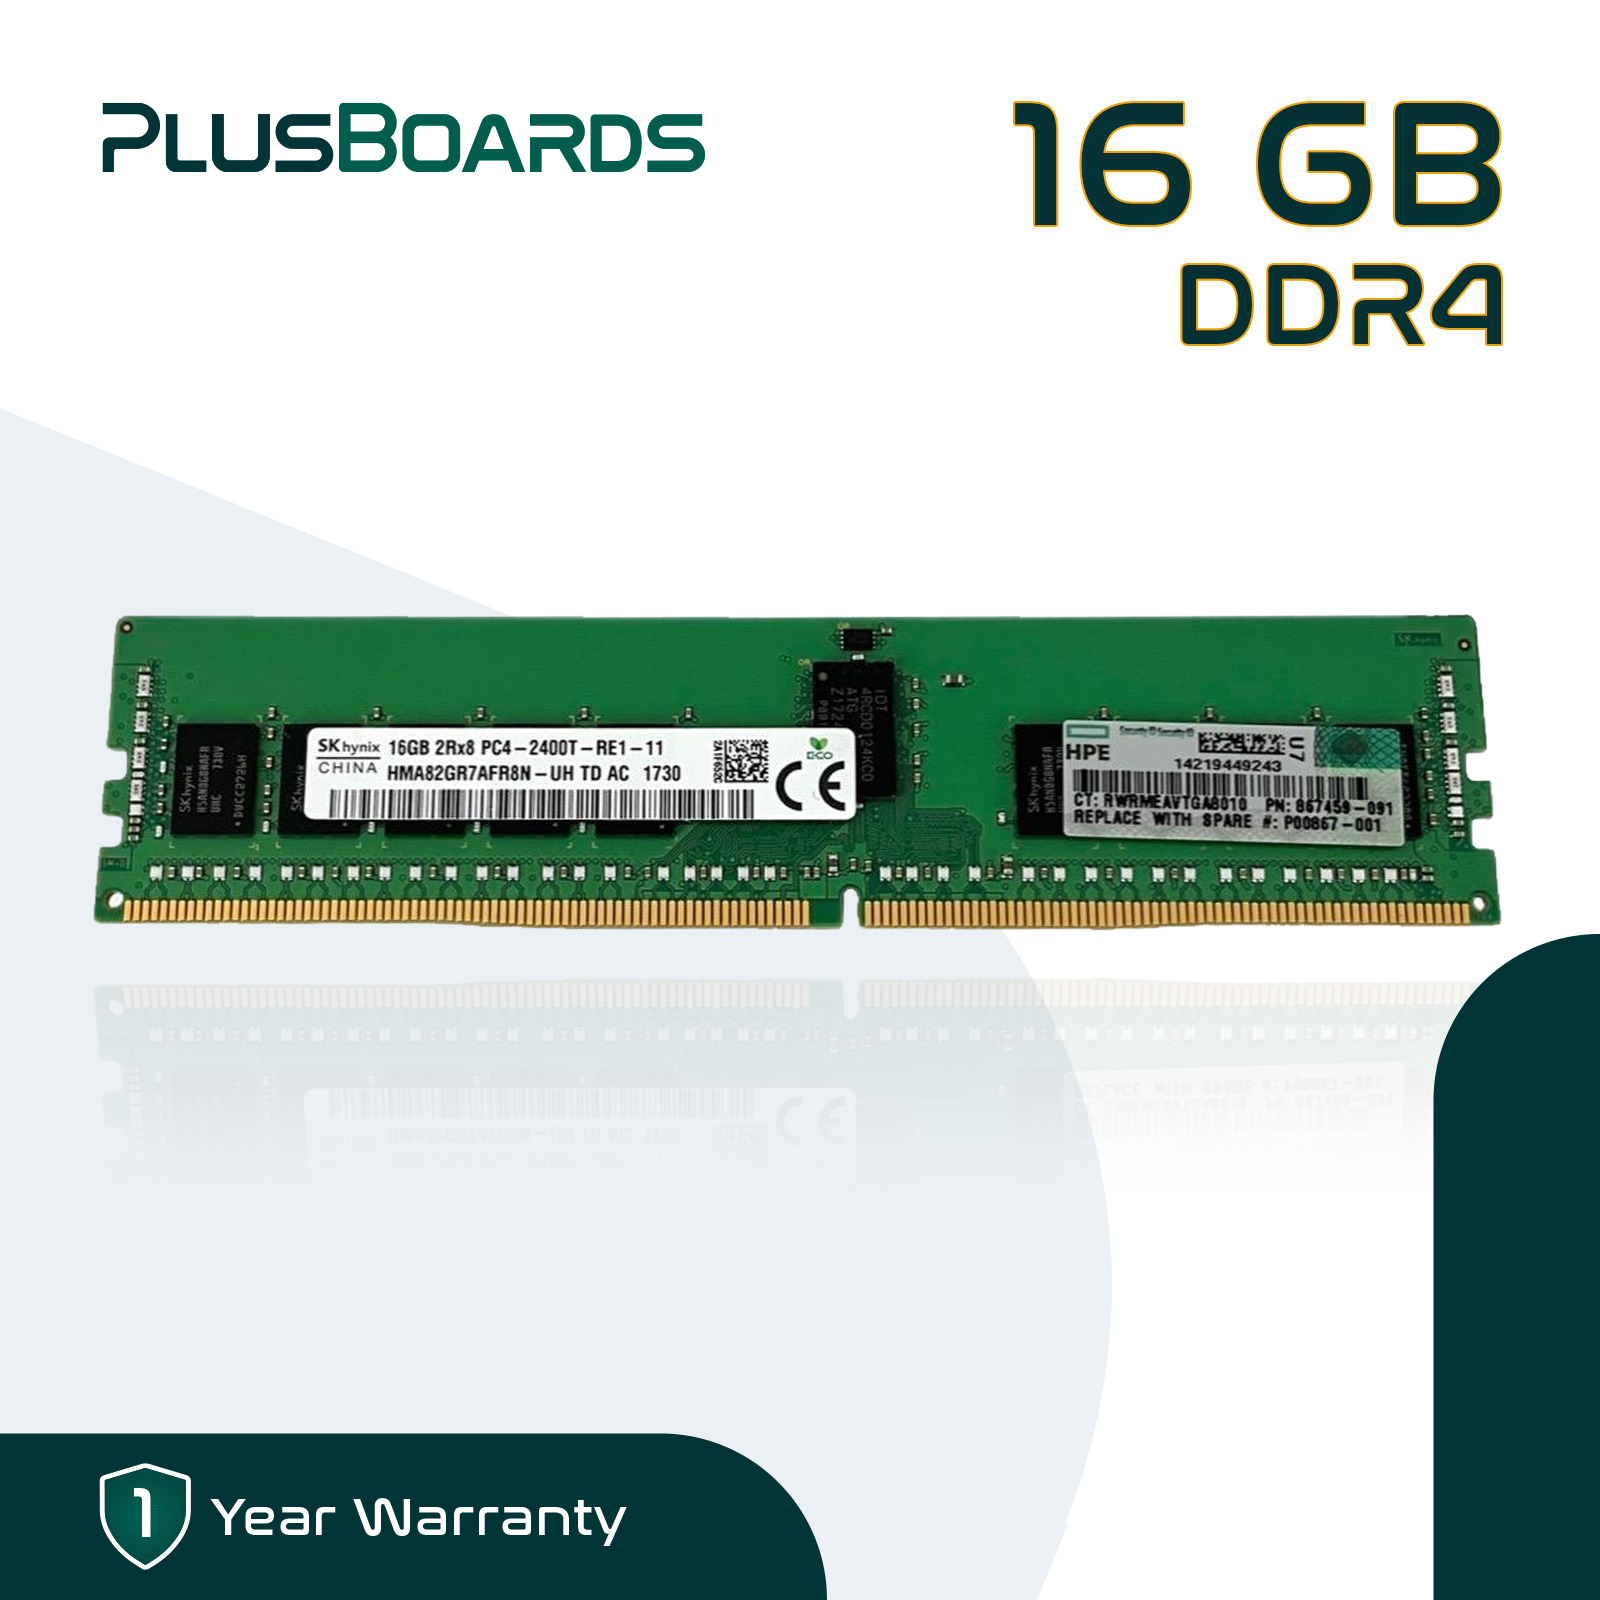 HP Original 16GB PC4-2400T DDR4 RDIMM 2400MHz 2Rx8 Memory